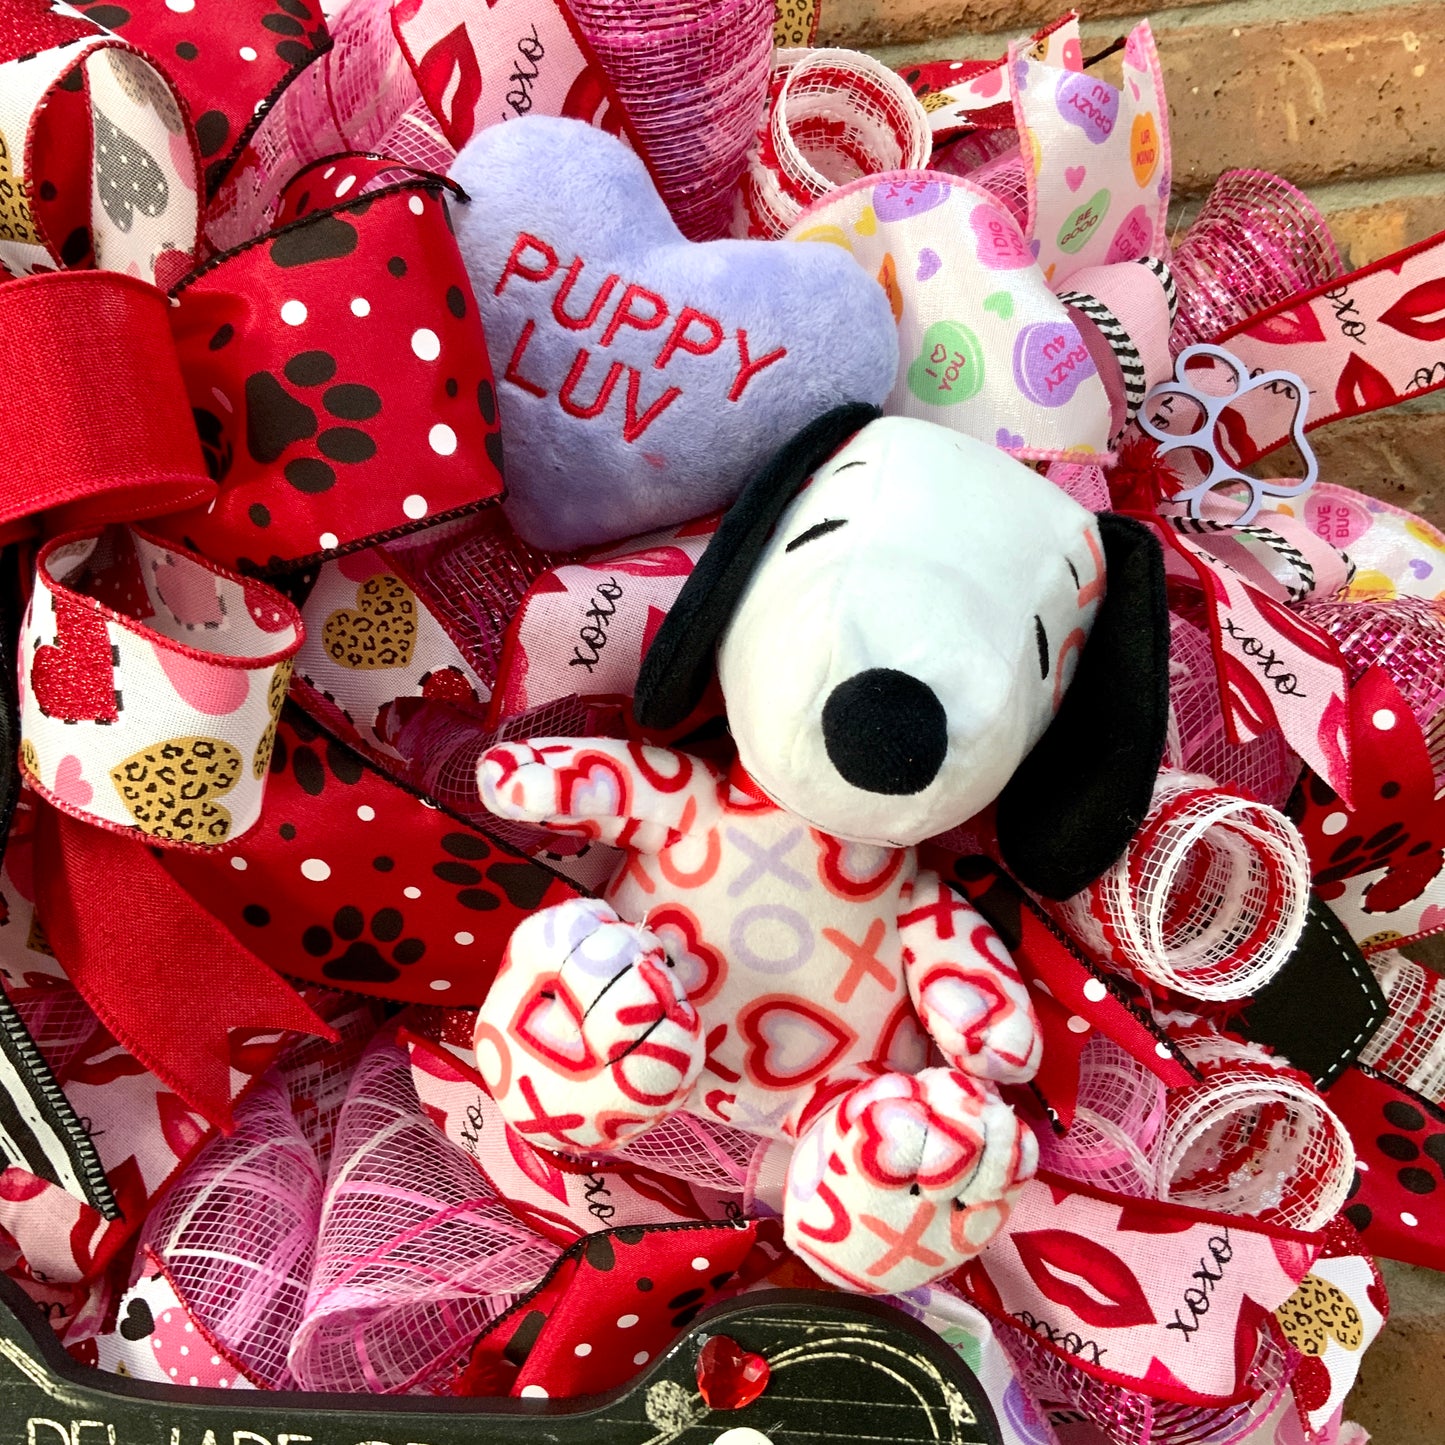 Snoopy Kisses Wreath, Snoopy Wreath, Valentine Snoopy Wreath, Beware of Dog Kisses Wreath, Dog Wreath, Valentine Dog Wreath